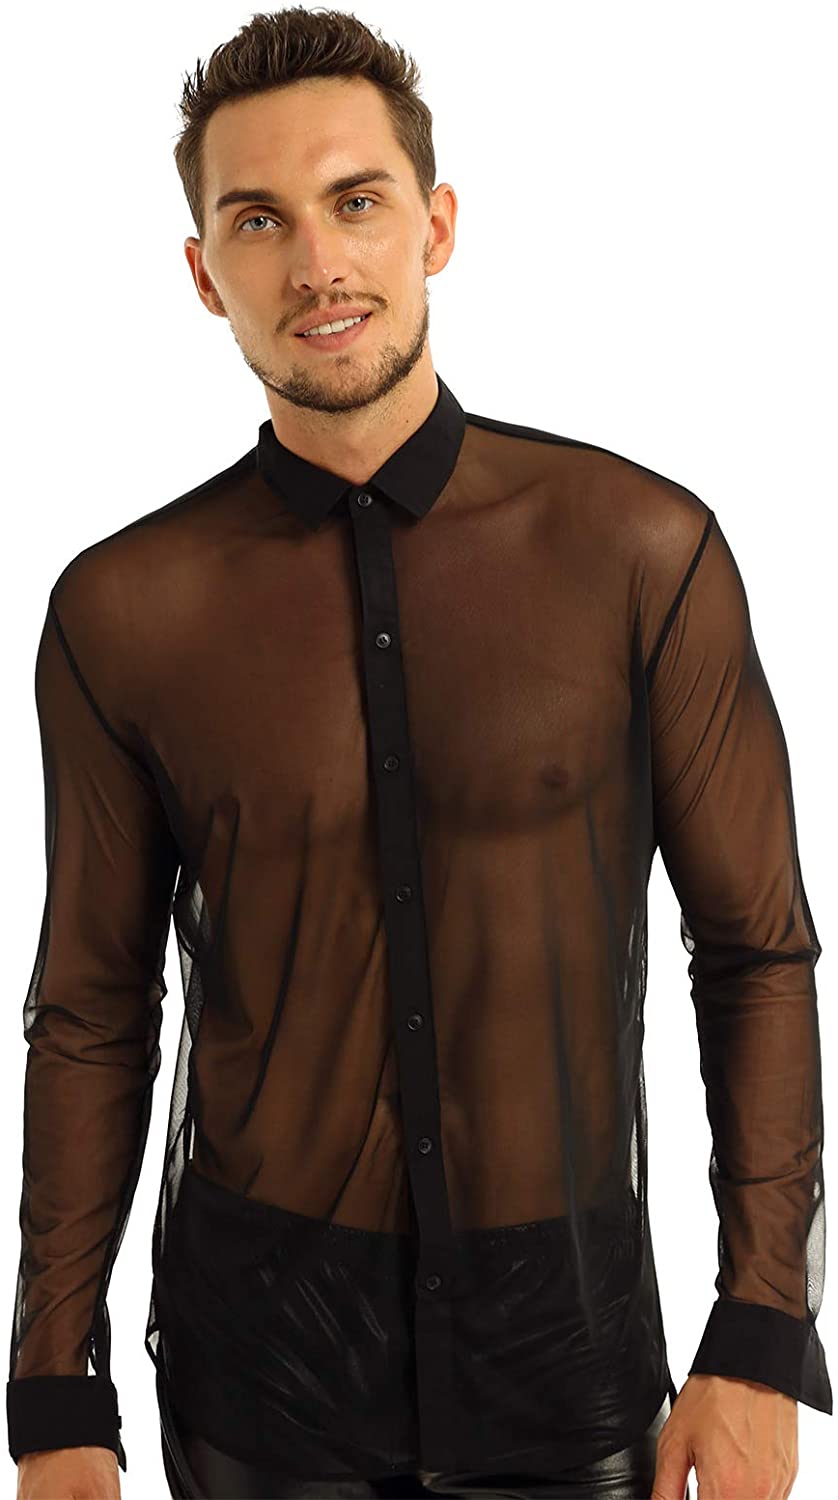 CHICTRY Men's Mesh Sheer See Through Long Sleeve Muscle Top Shirt Clubwear